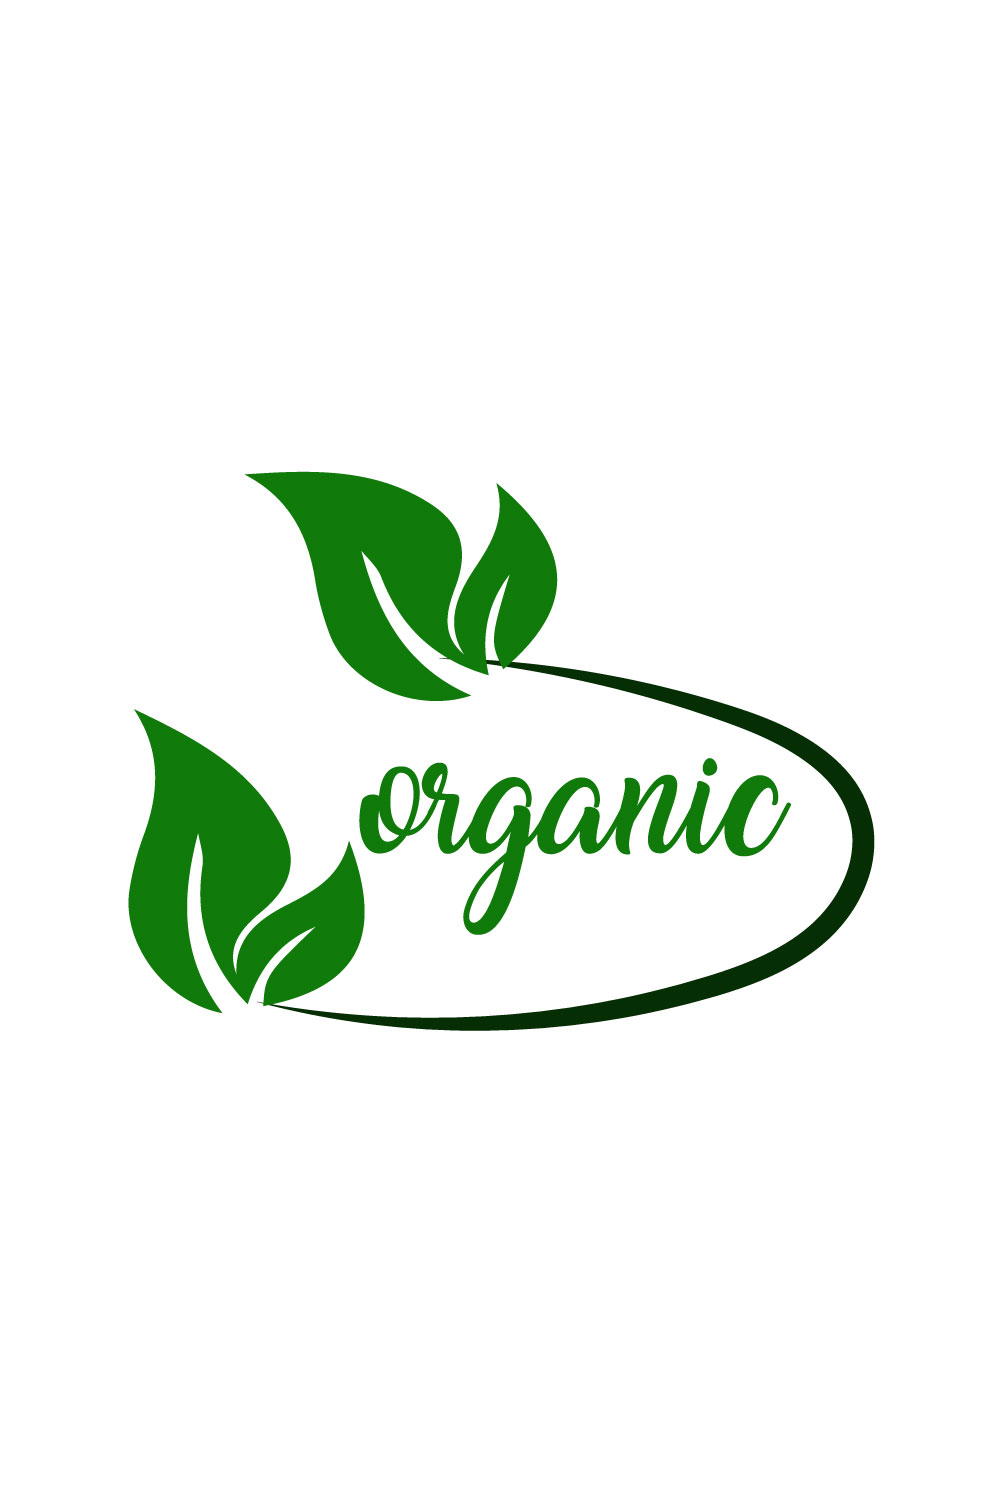 Free Plant-based logo - MasterBundles